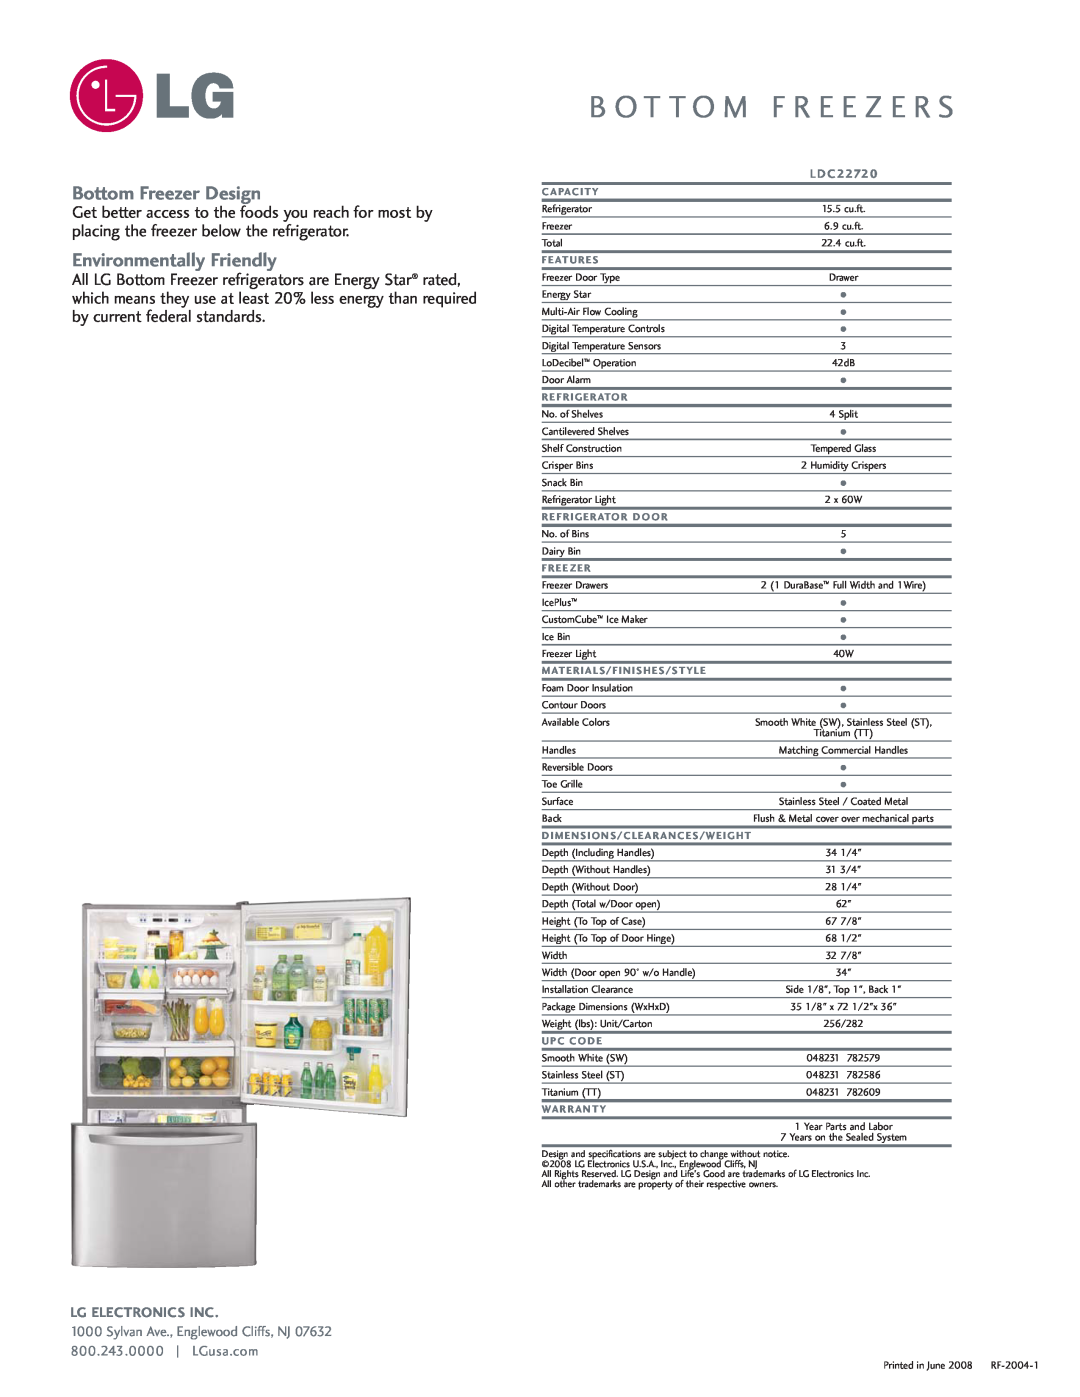 LG Electronics LDC22720 Bottom Freezer Design, Environmentally Friendly, B O T T O M F R E E Z E R S, Lg Electronics Inc 